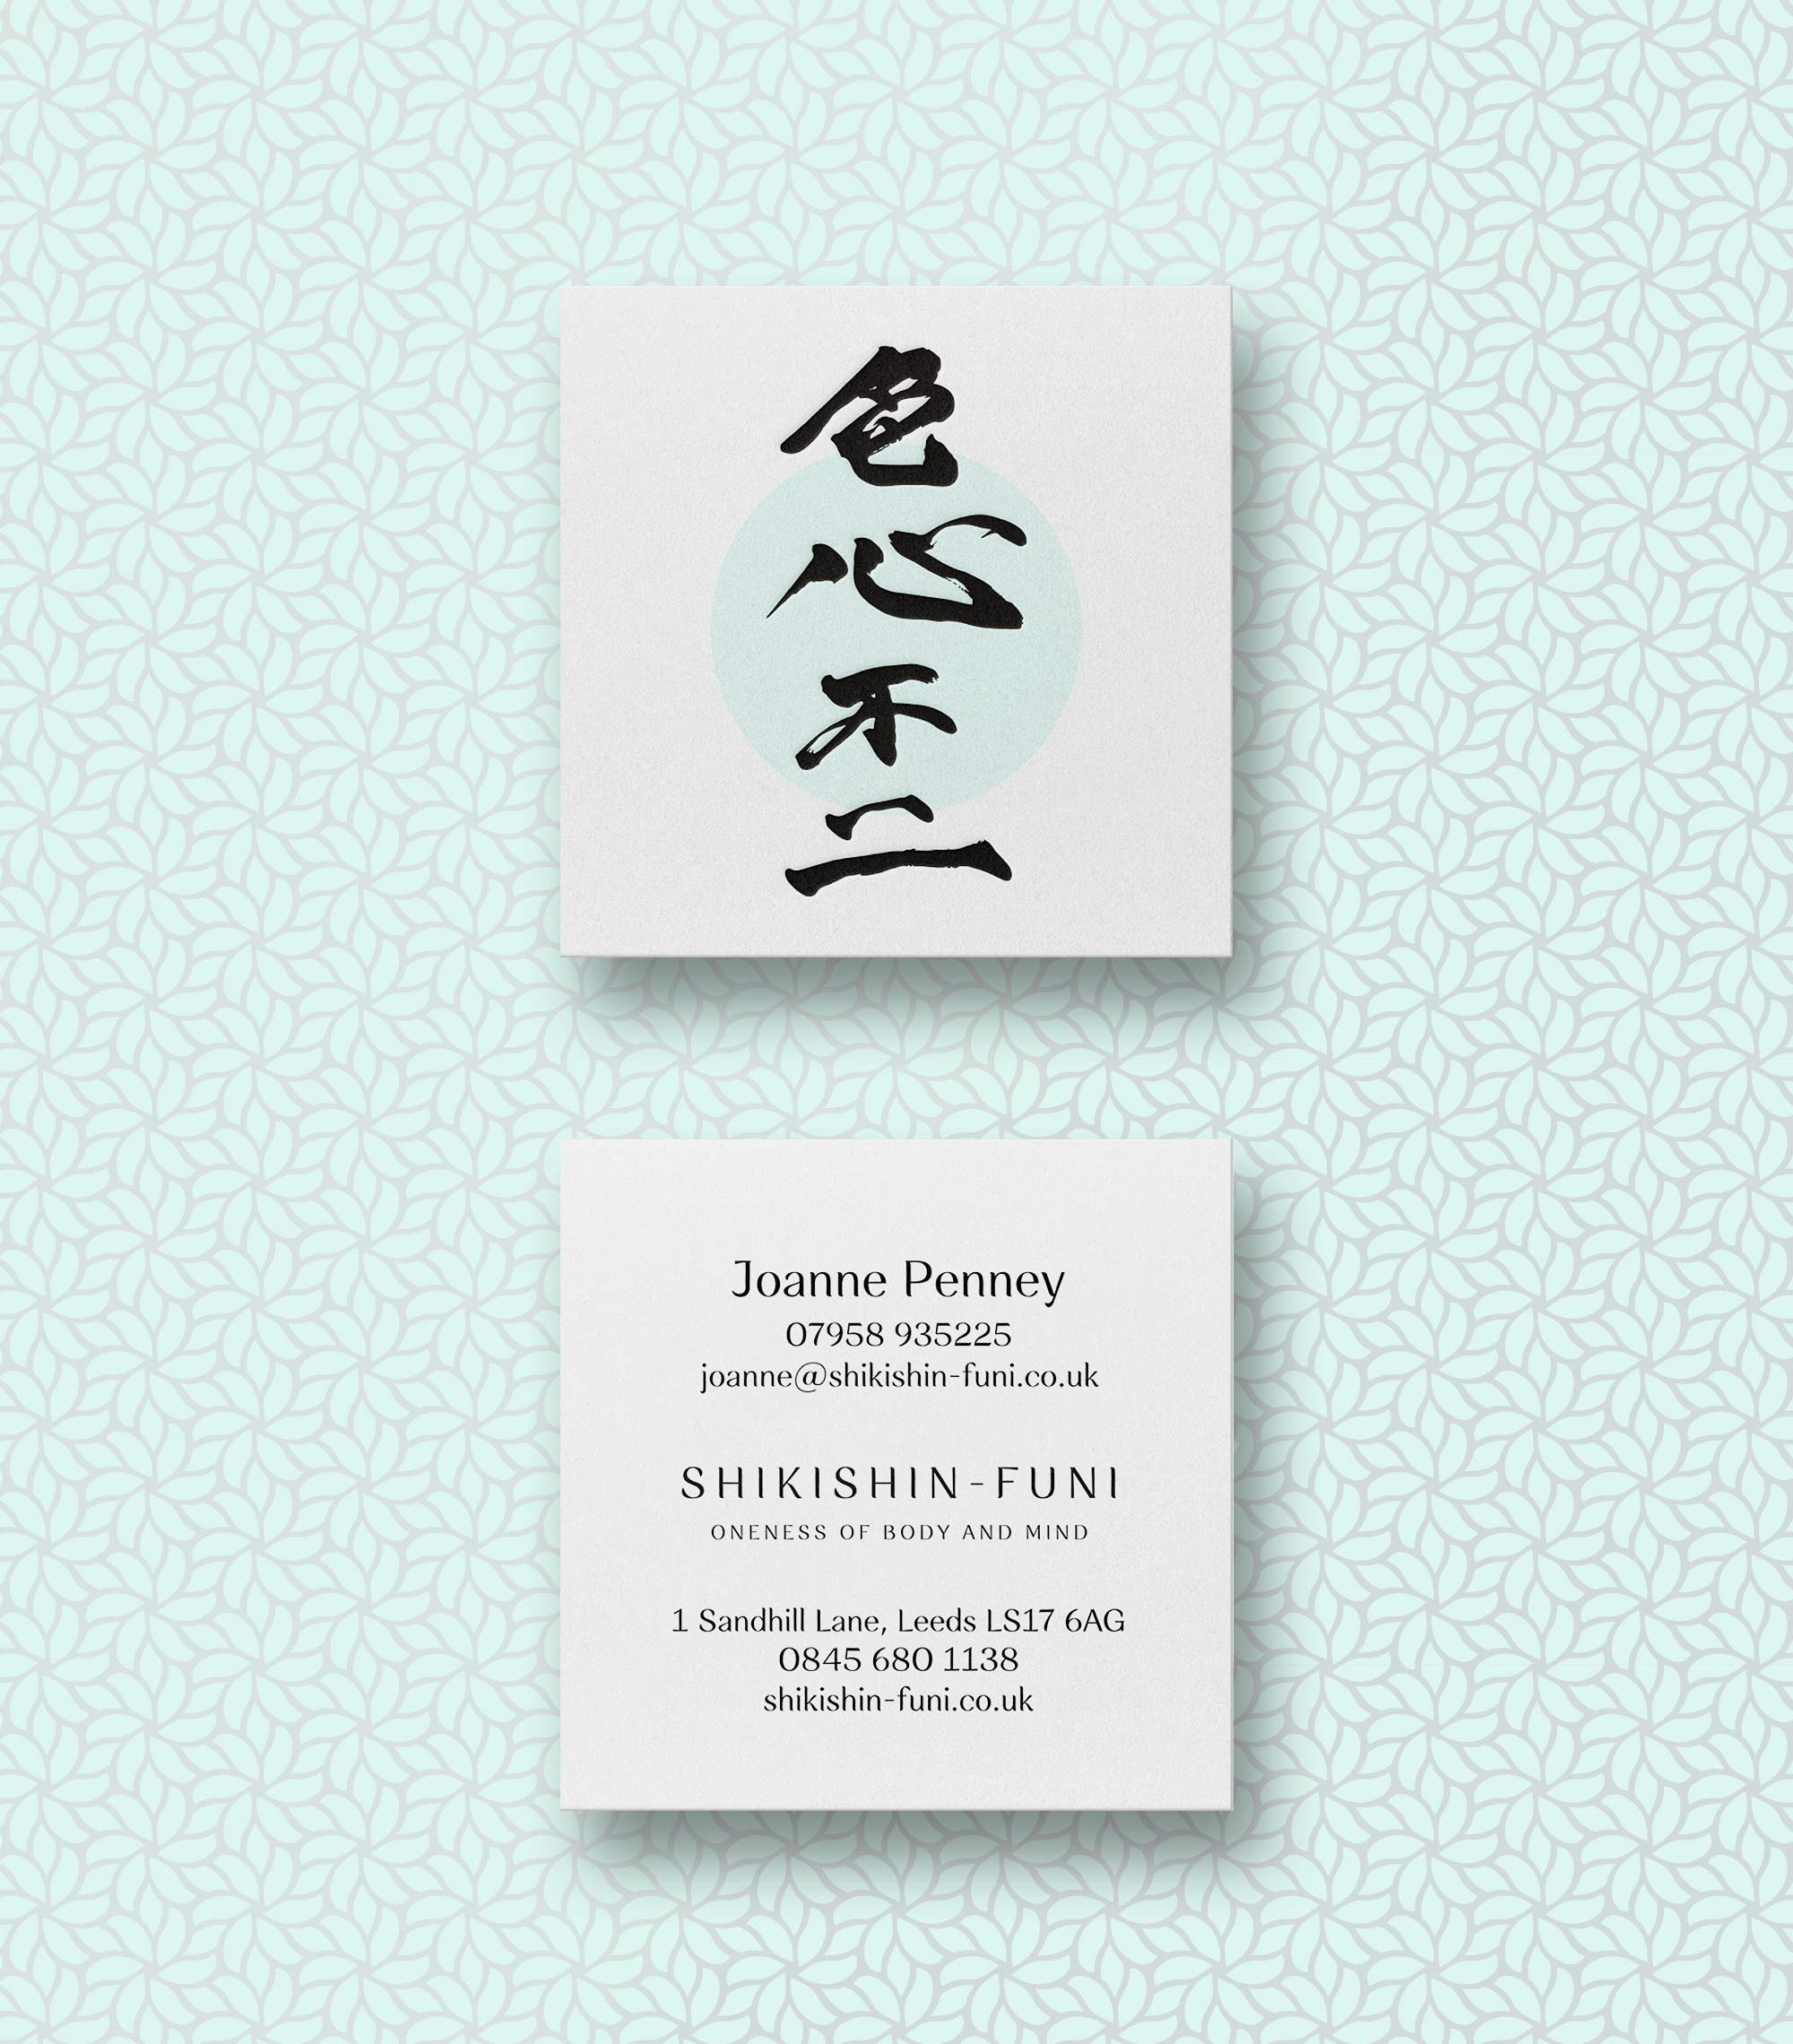 Shikishin-Funi Business Card